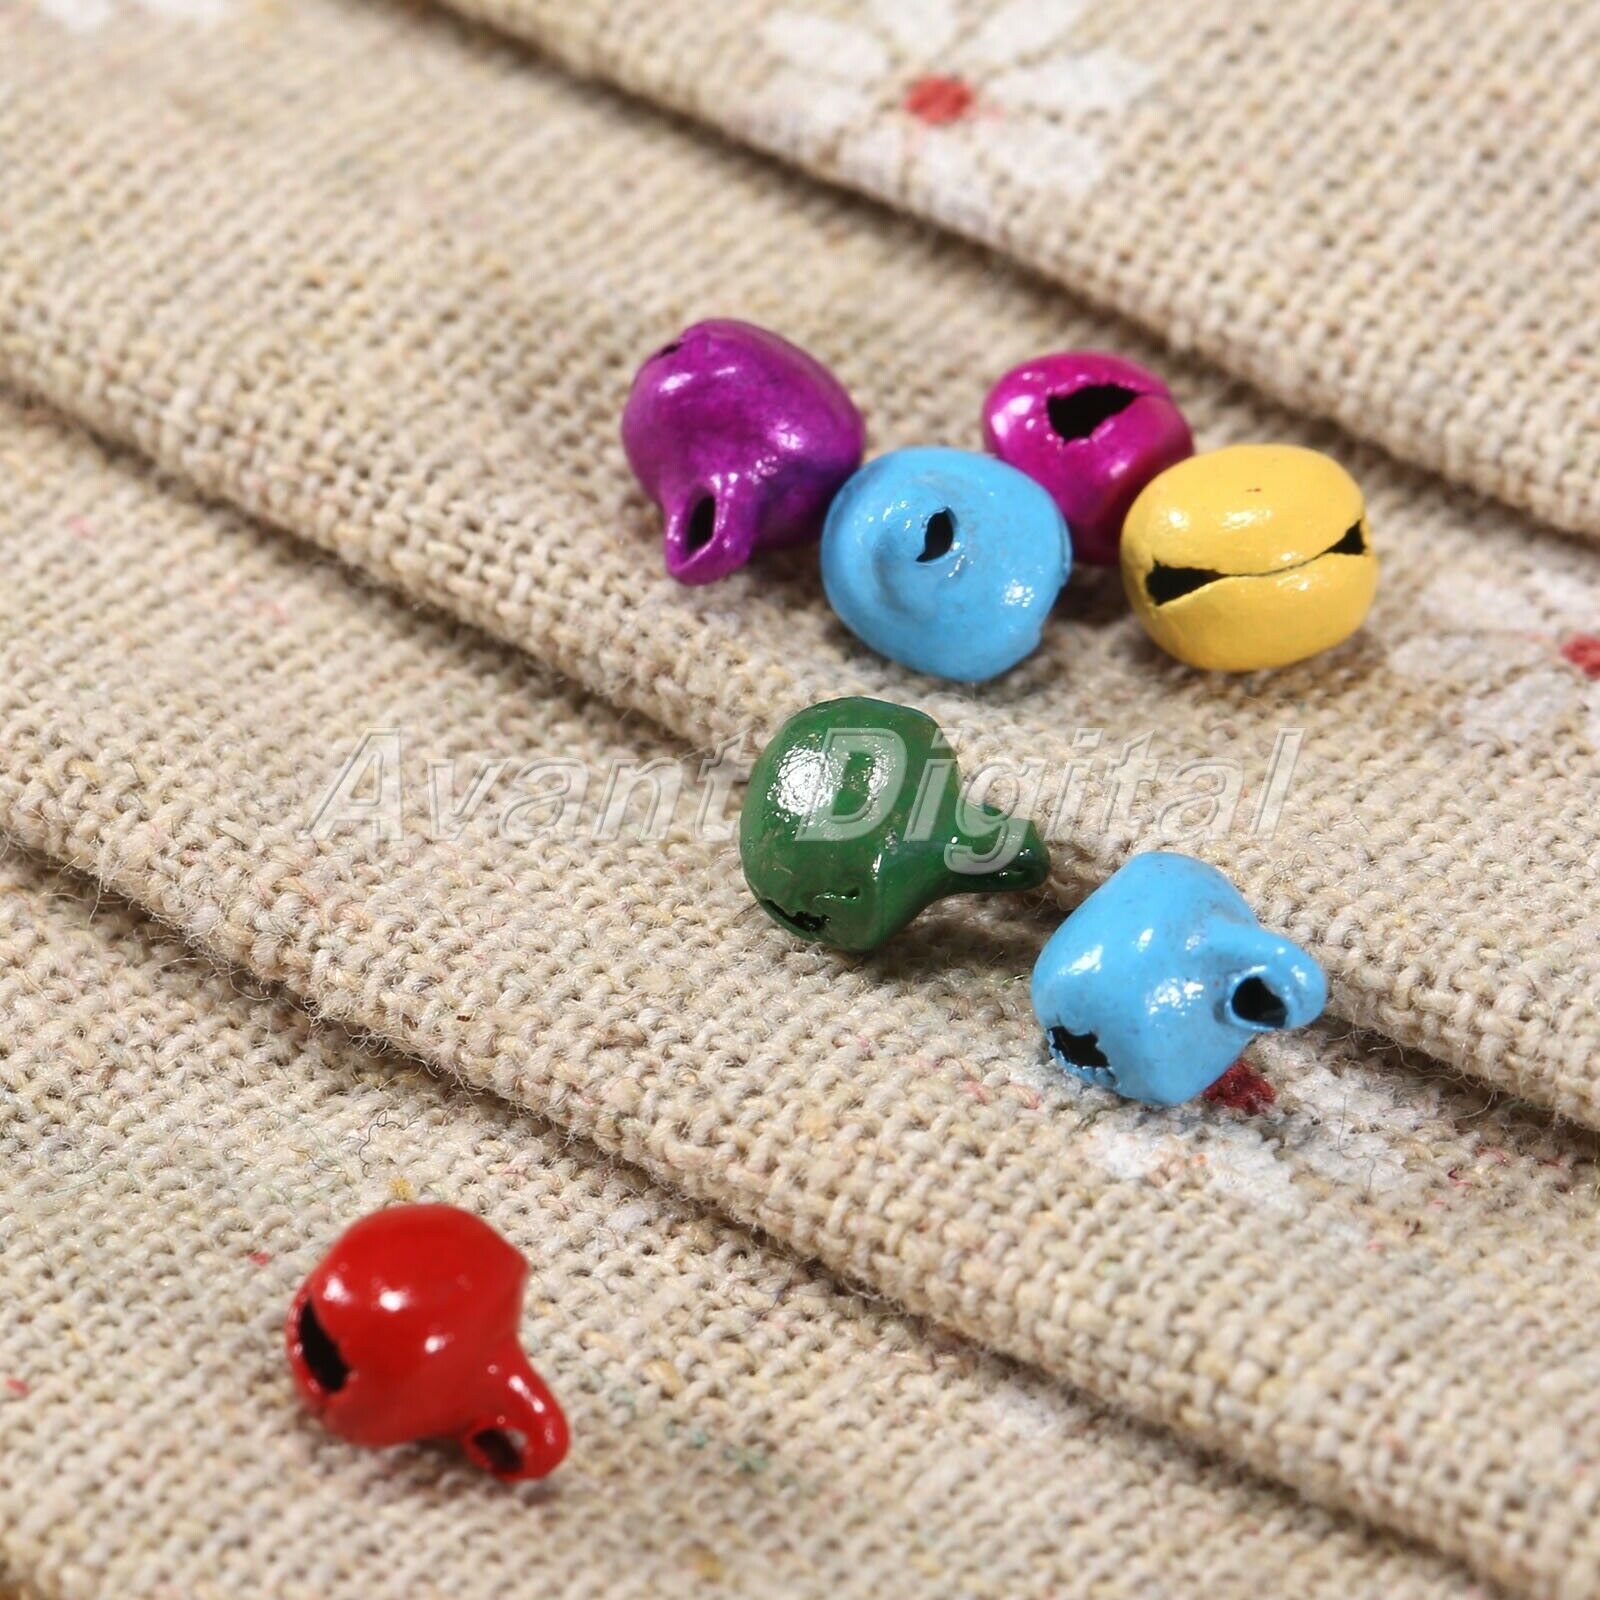 100 pcs Xmas Colorful Iron Beads Christmas Jingle Bells DIY Craft Jewelry 8x6 mm